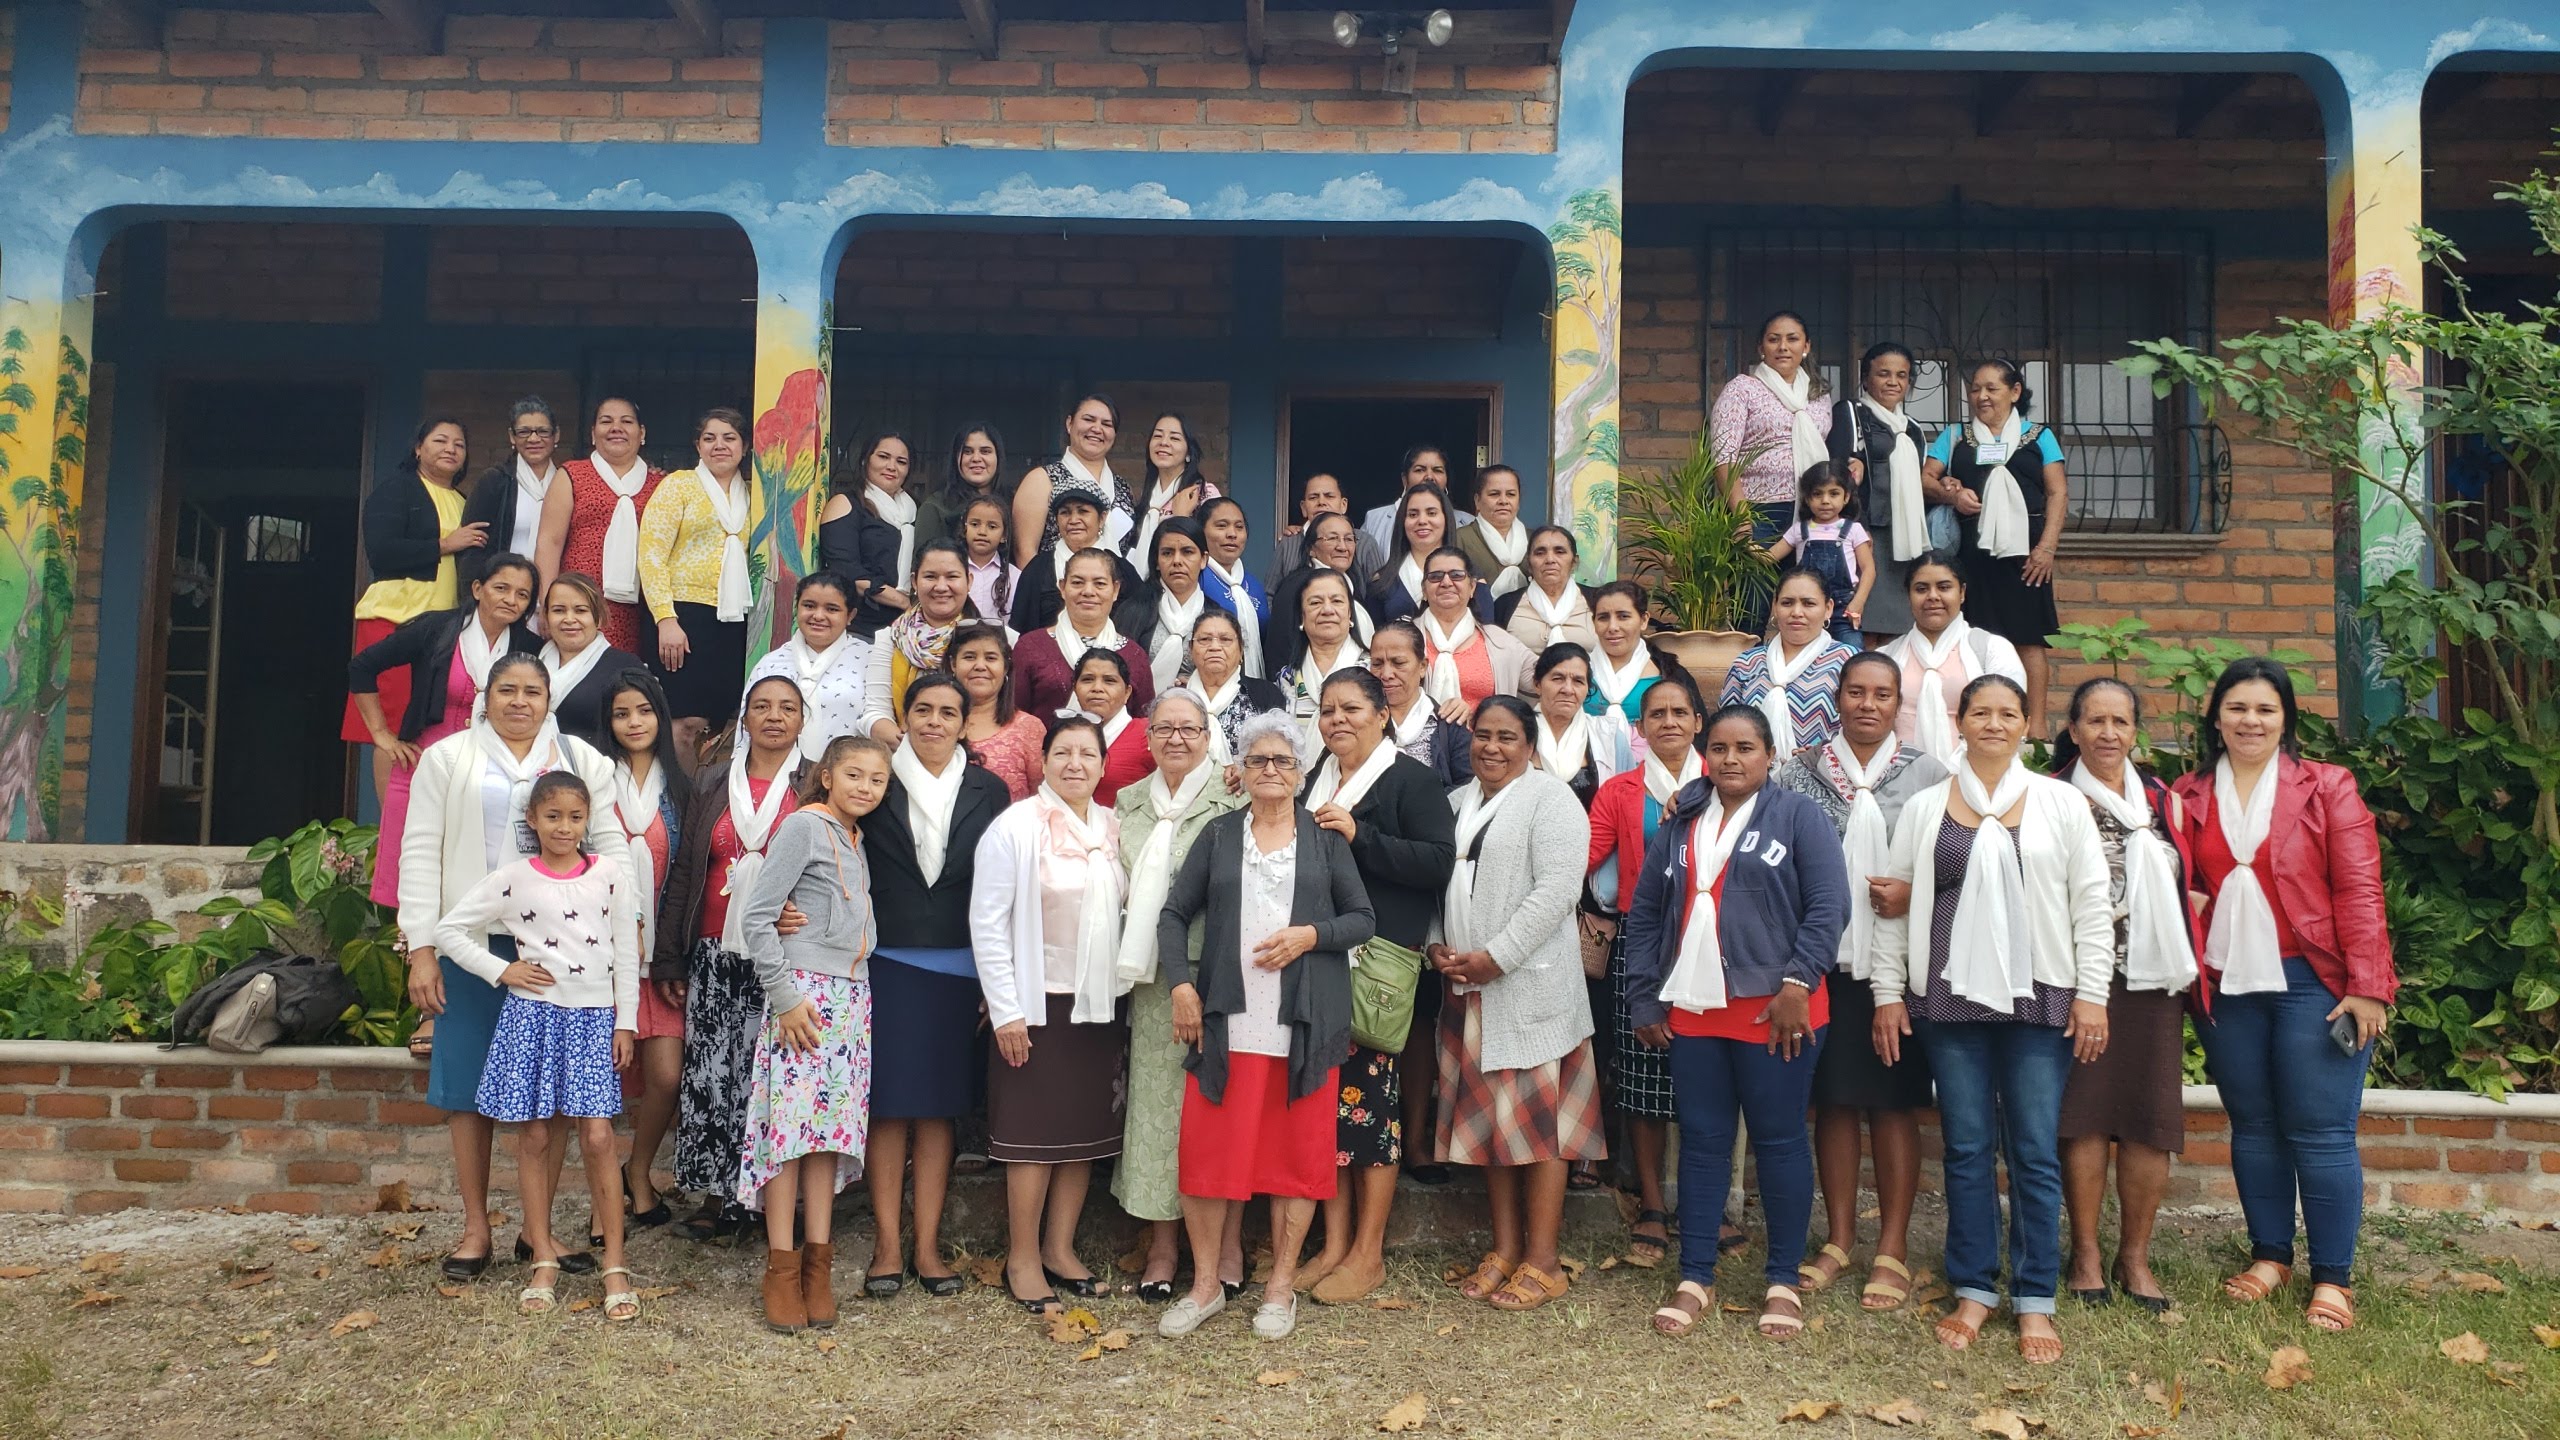 Participants in the annual Presbyterian women’s retreat, held for the first time at Centro de Retiros Villa de Gracia, operated by women of the Presbyterian Church of Honduras.